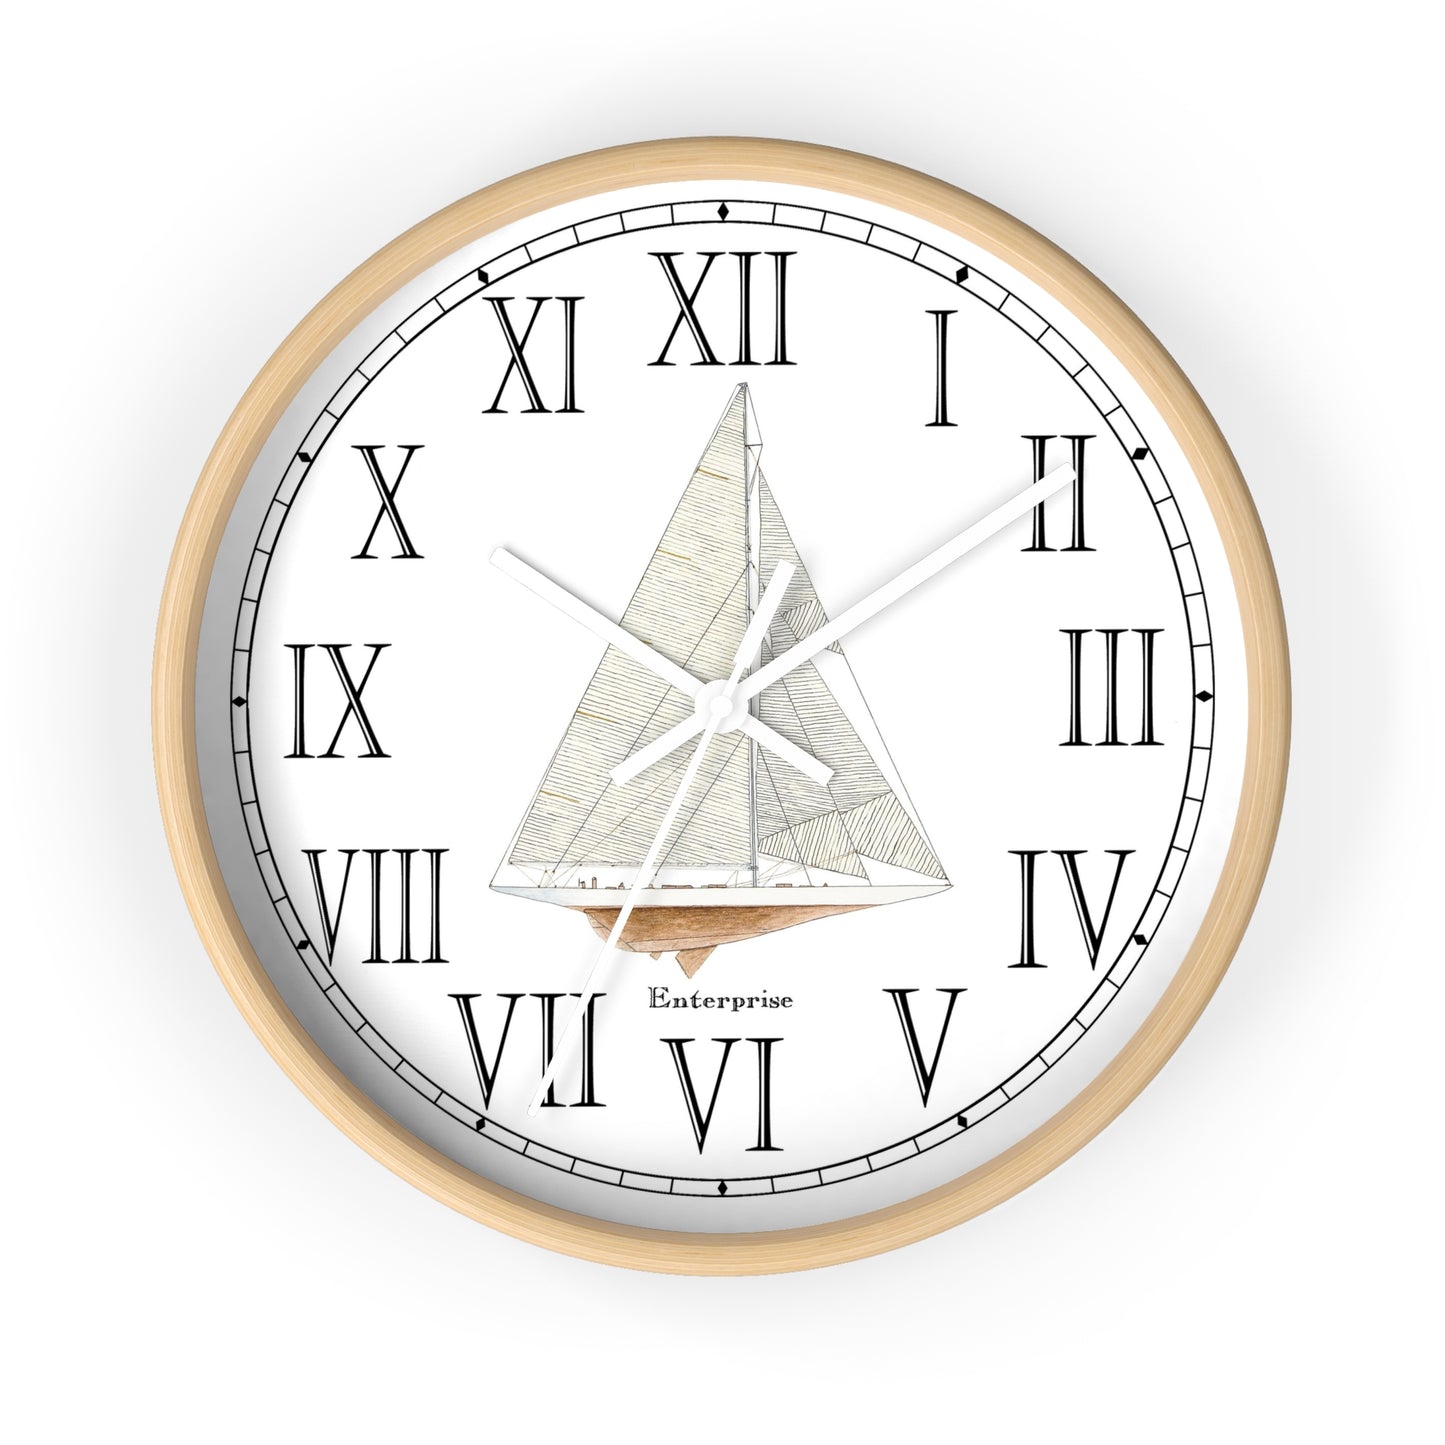 Enterprise Roman Numeral Clock